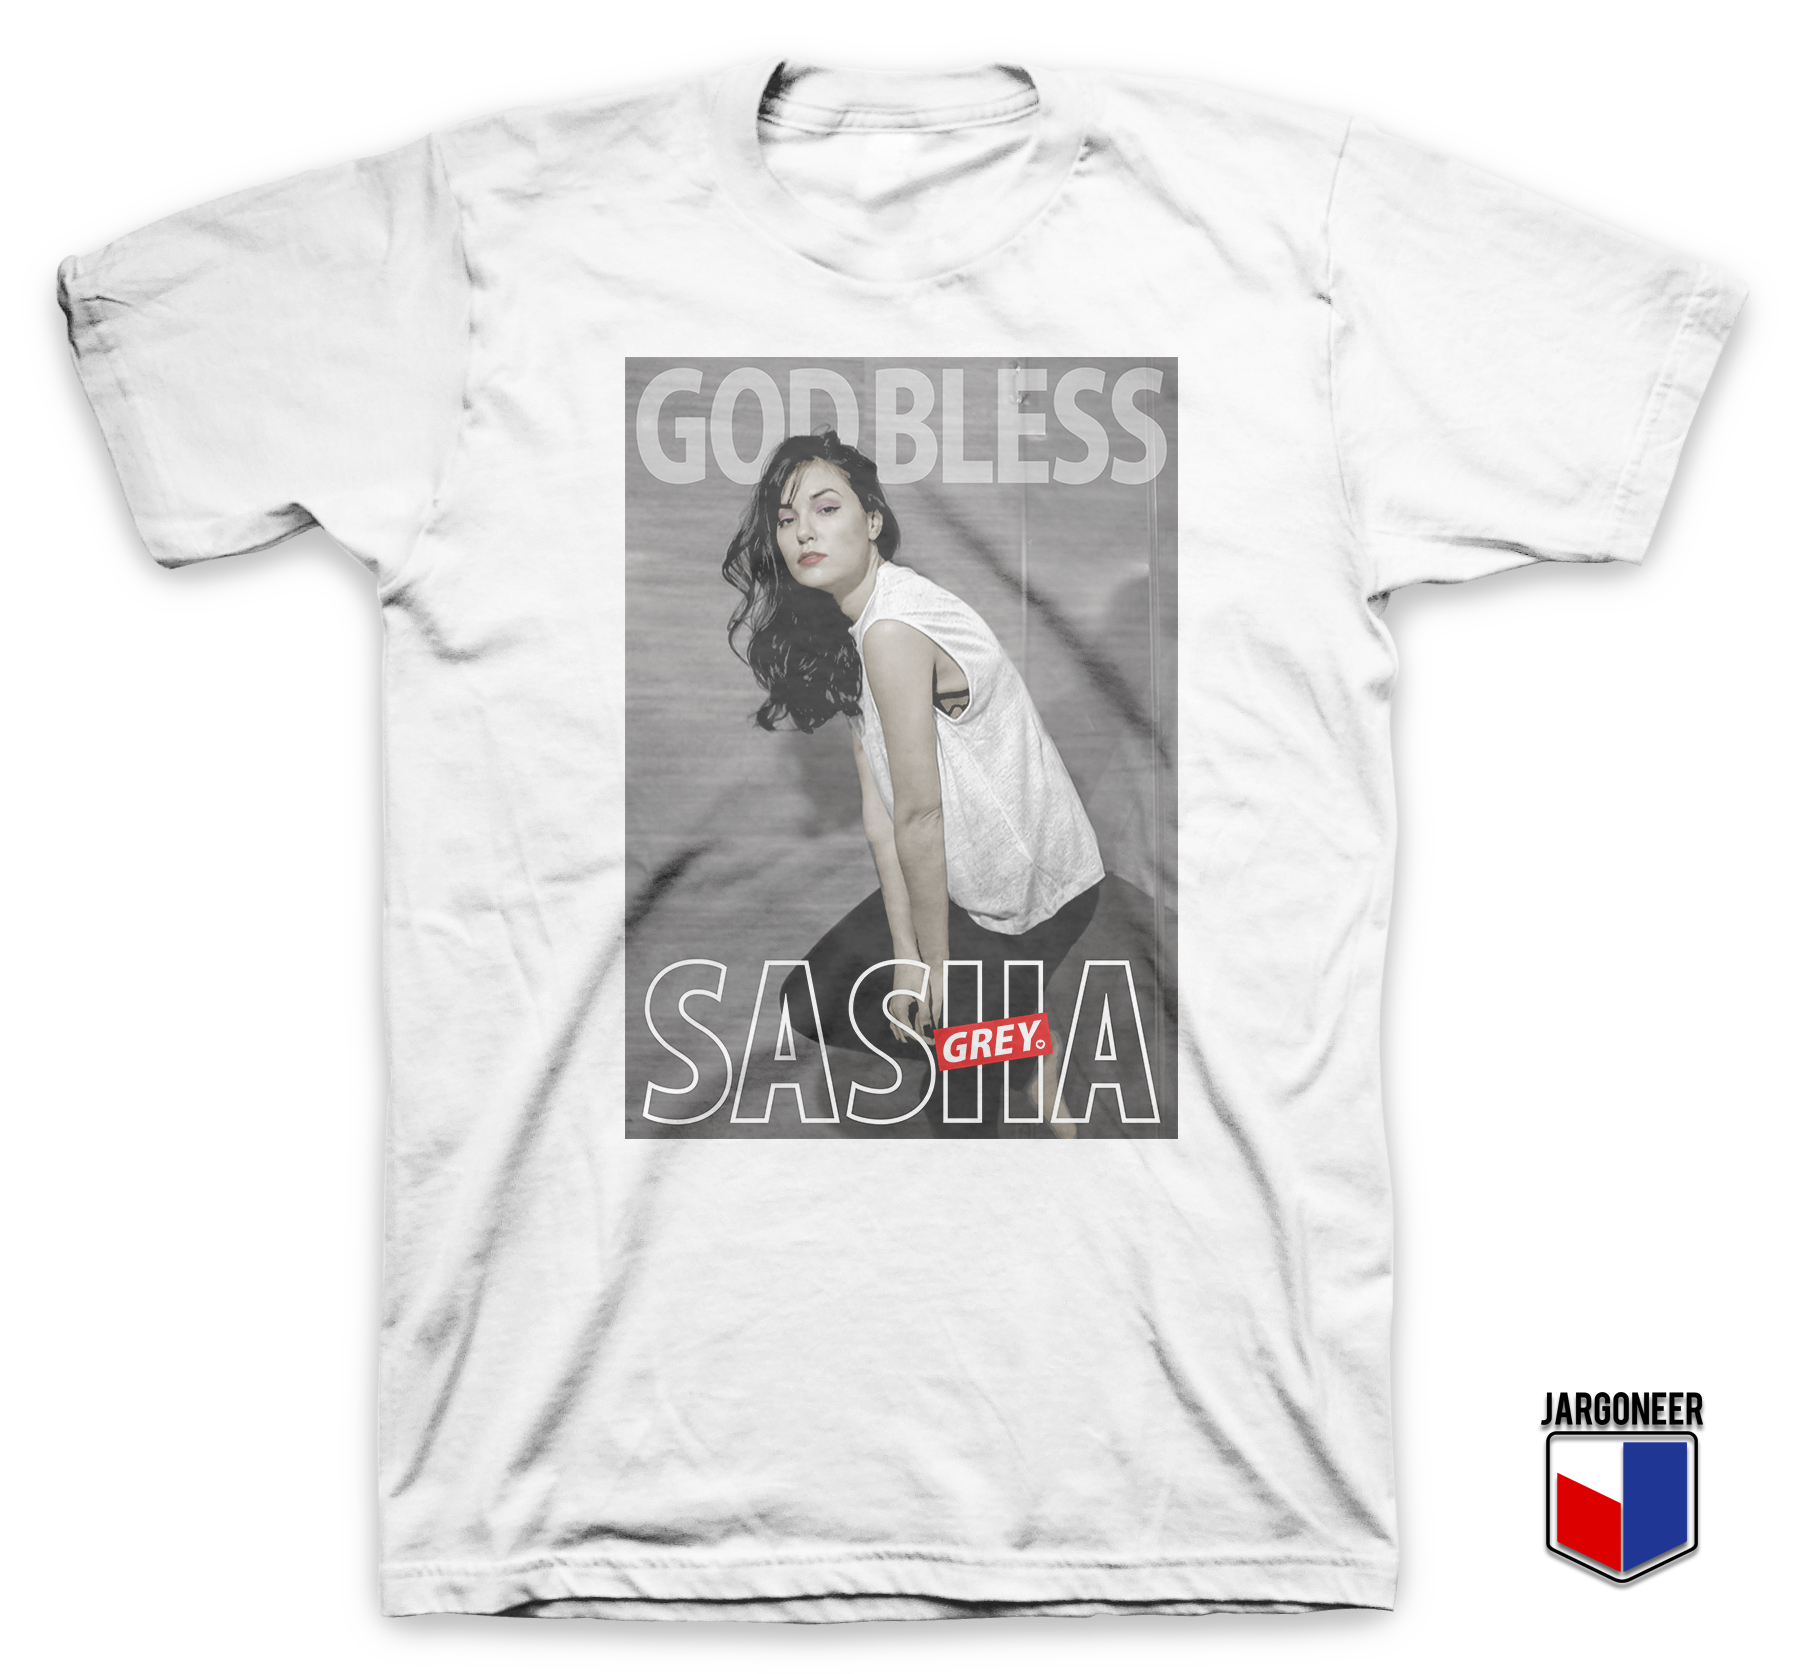 God Bless Sasha Grey - Shop Unique Graphic Cool Shirt Designs